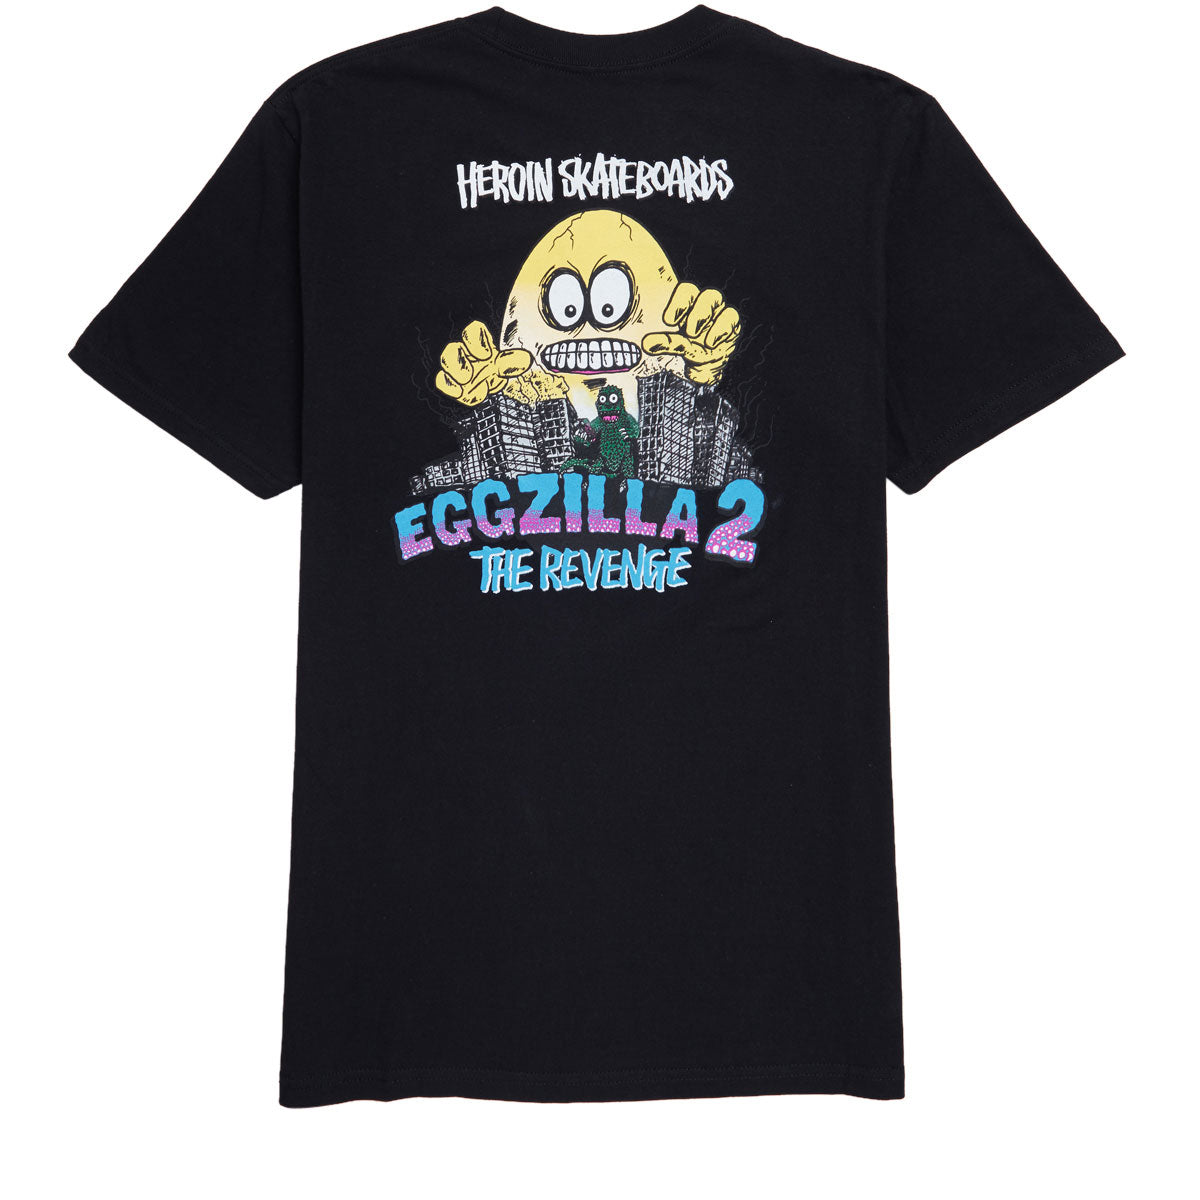 Heroin Eggzilla T-Shirt - Black image 1